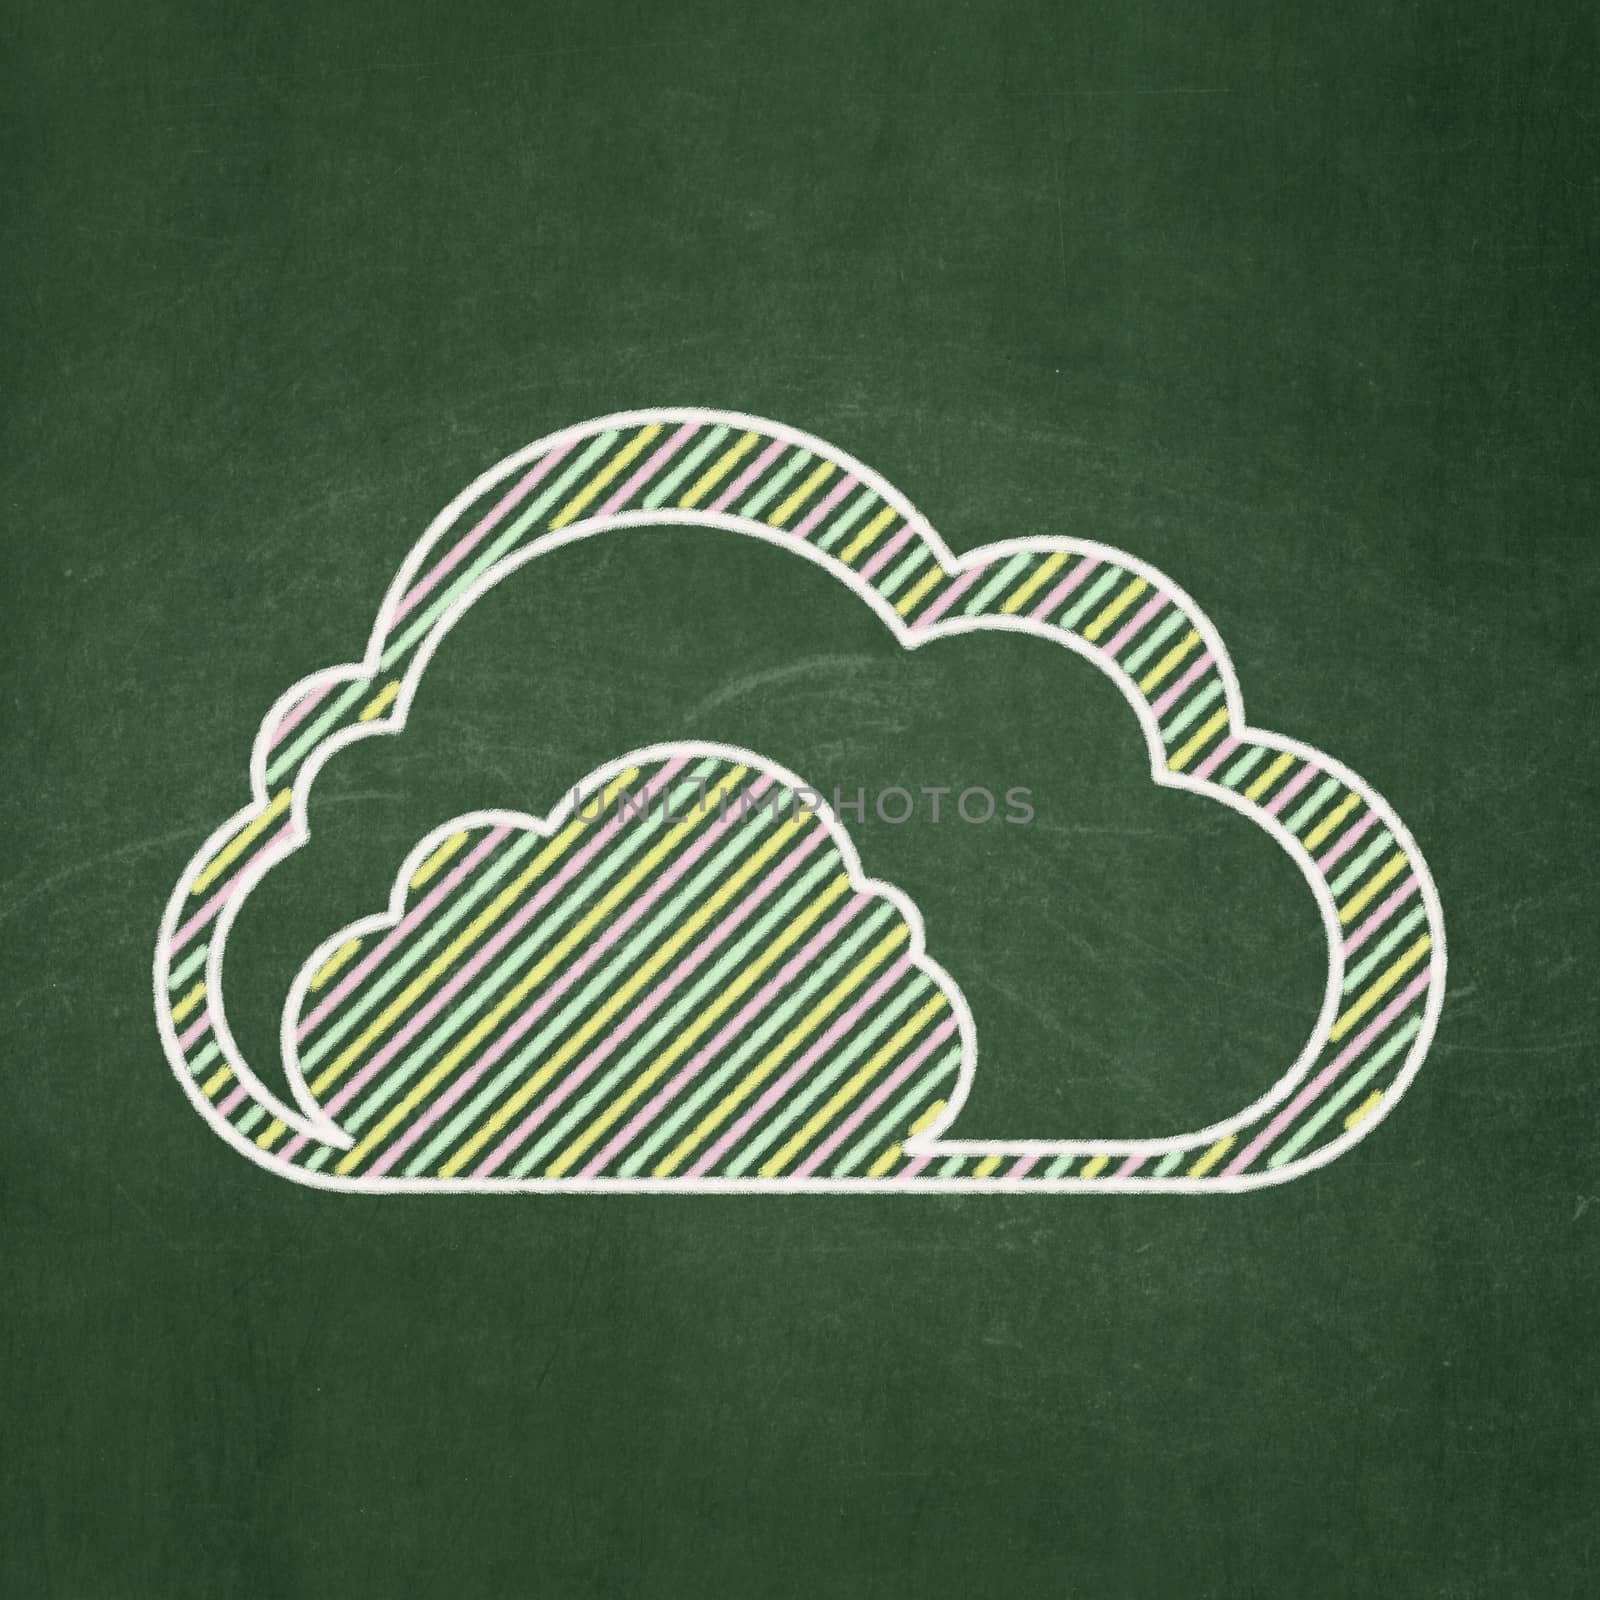 Cloud technology concept: Cloud on chalkboard background by maxkabakov